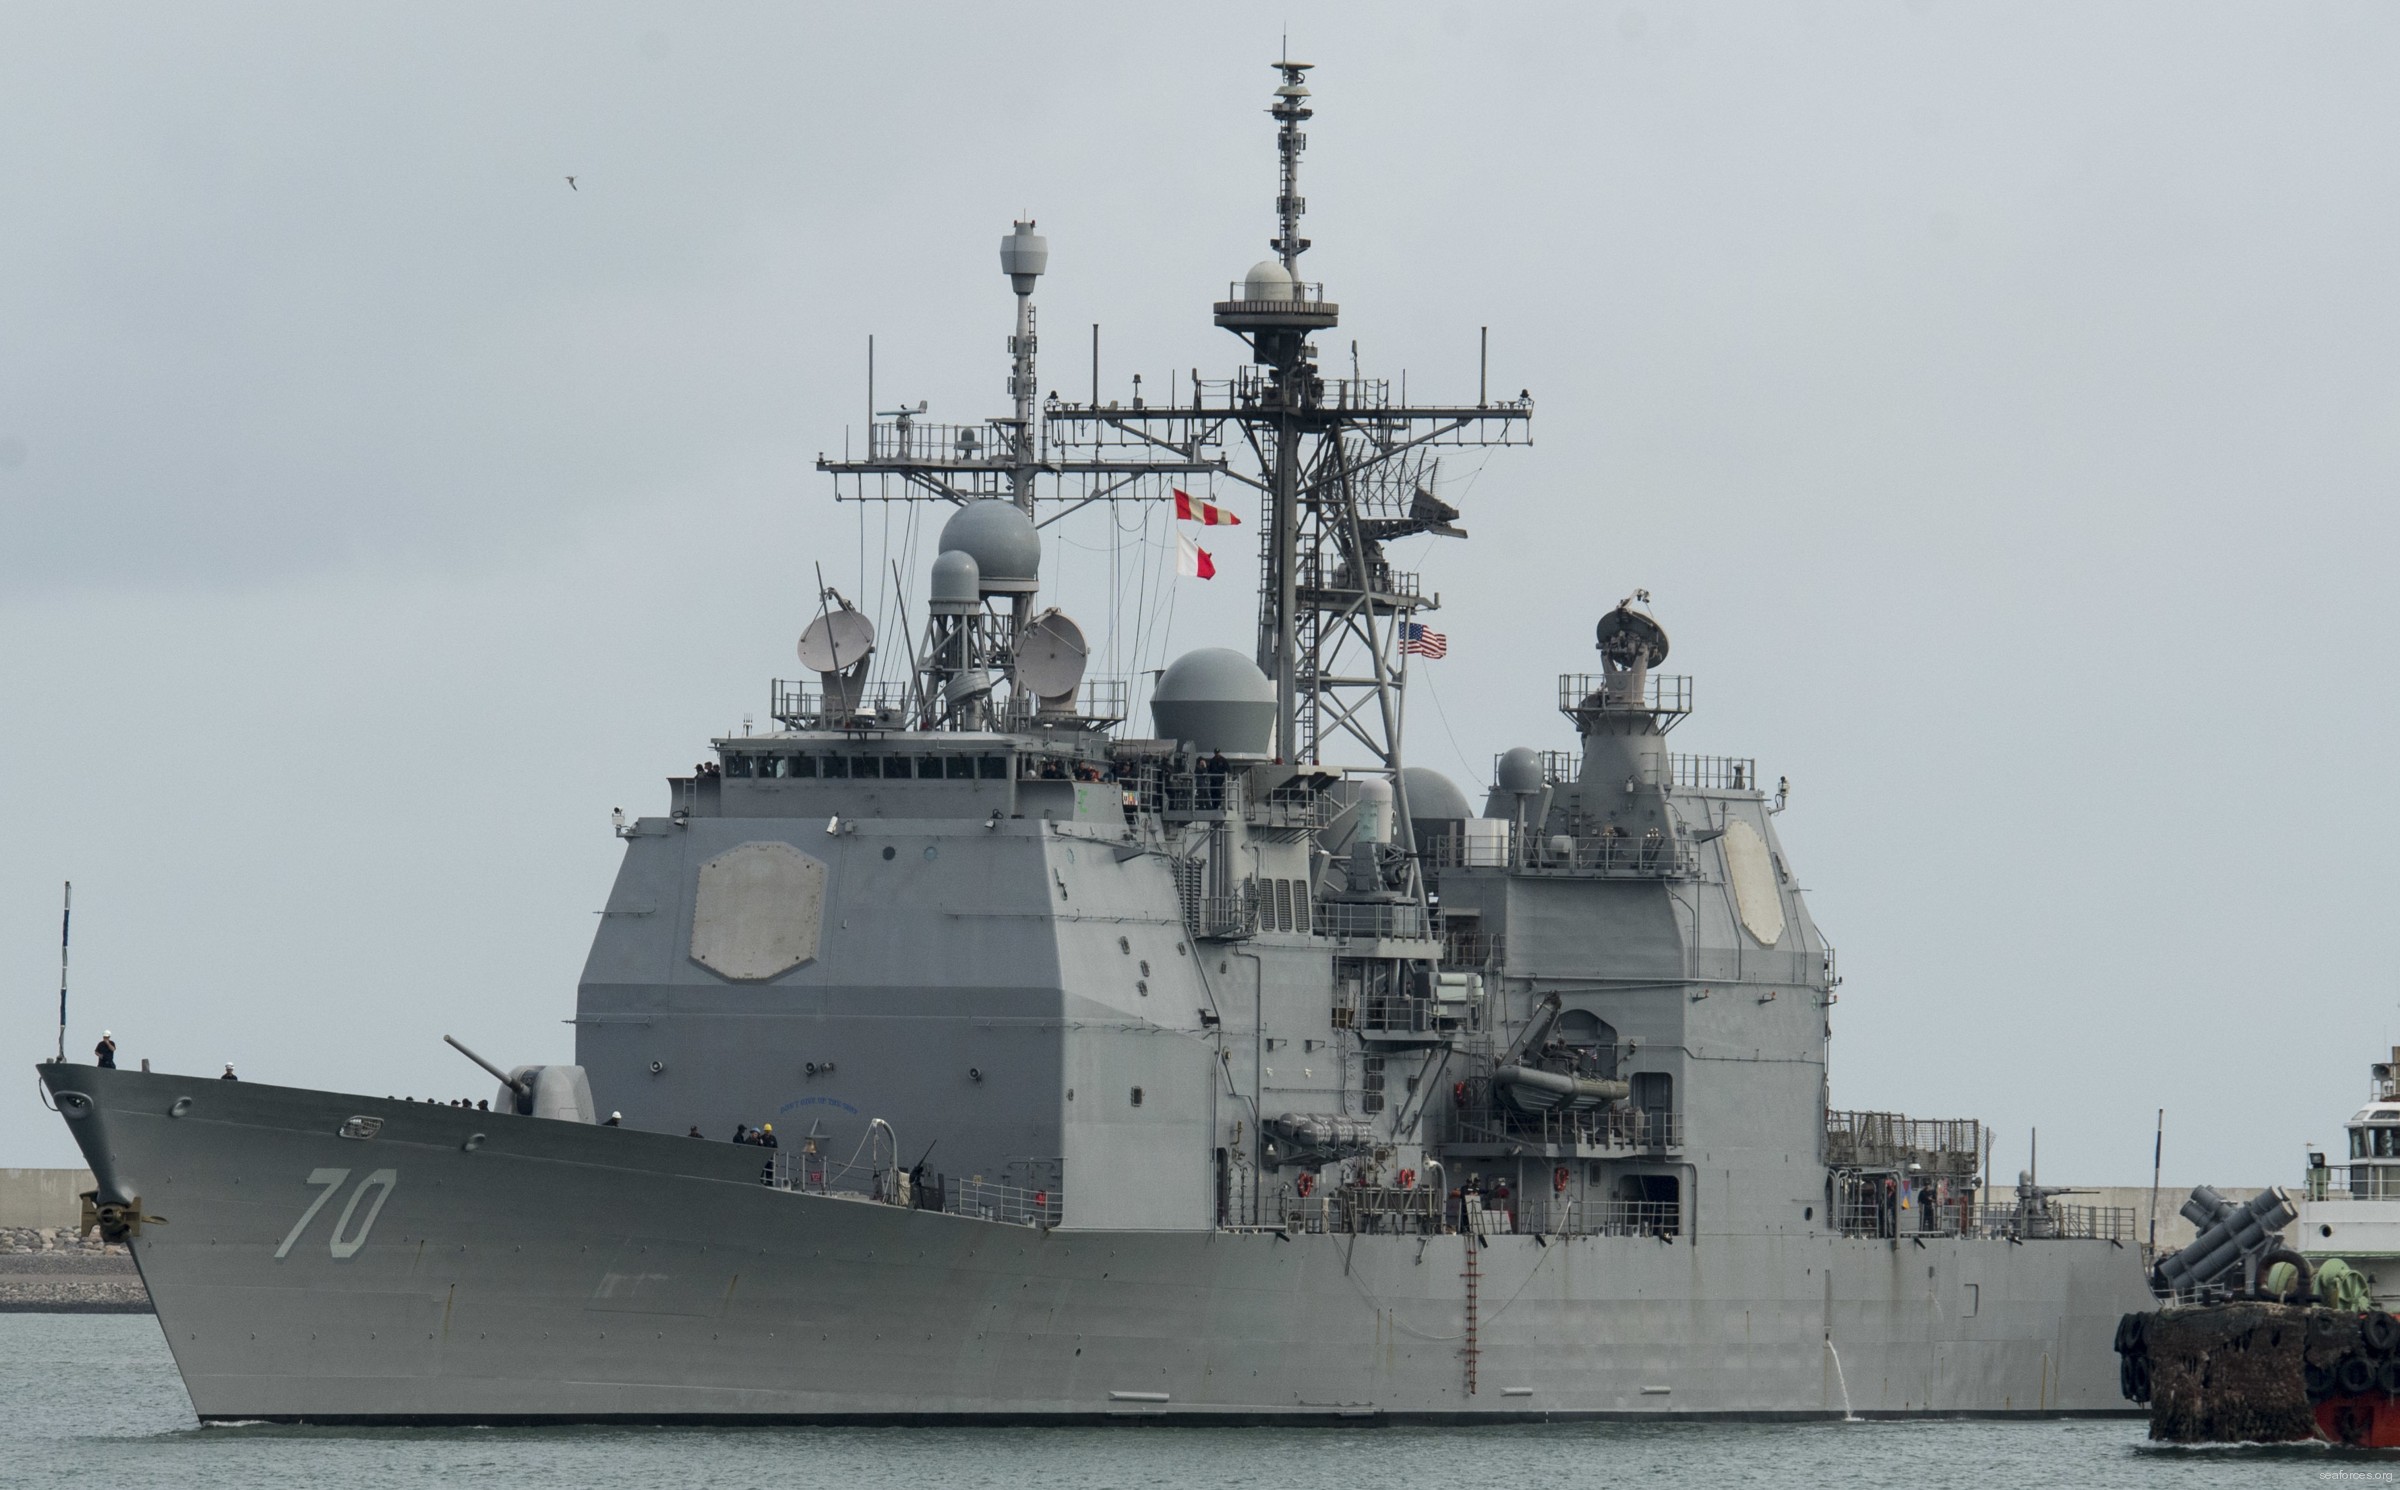 cg-70 uss lake erie ticonderoga class guided missile cruiser us navy bath iron works maine homeport san diego 101x